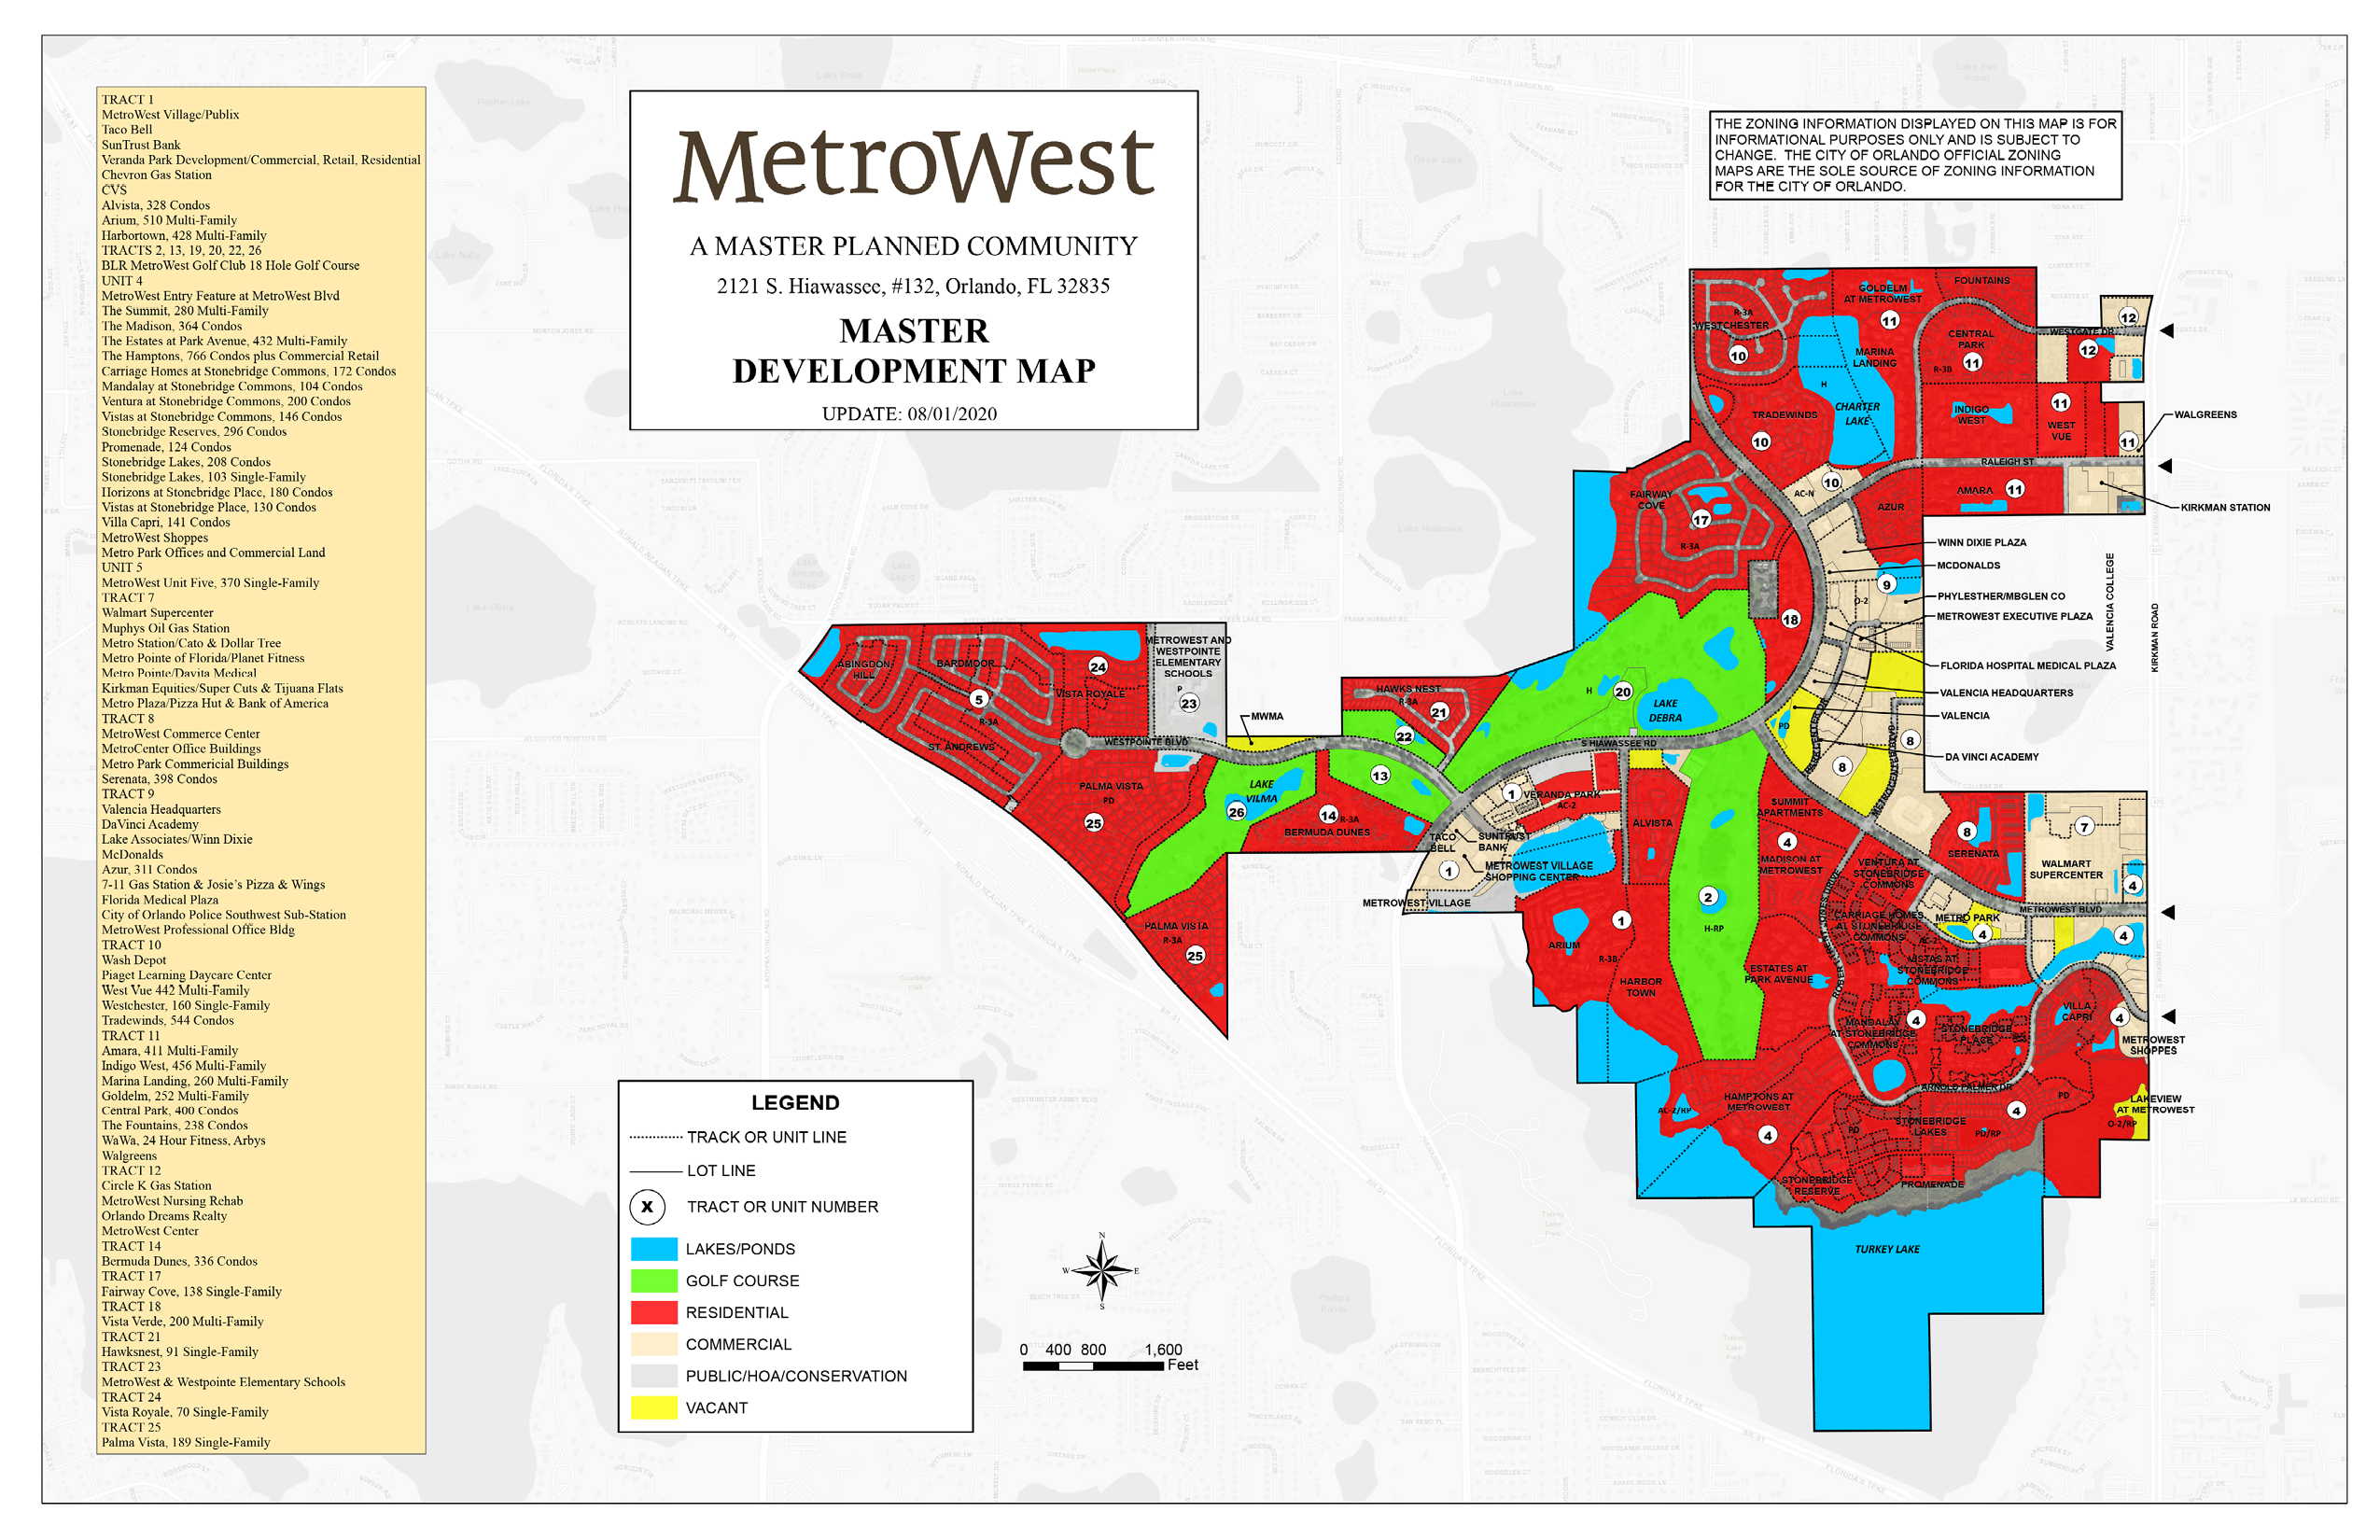 Metrowest master development map